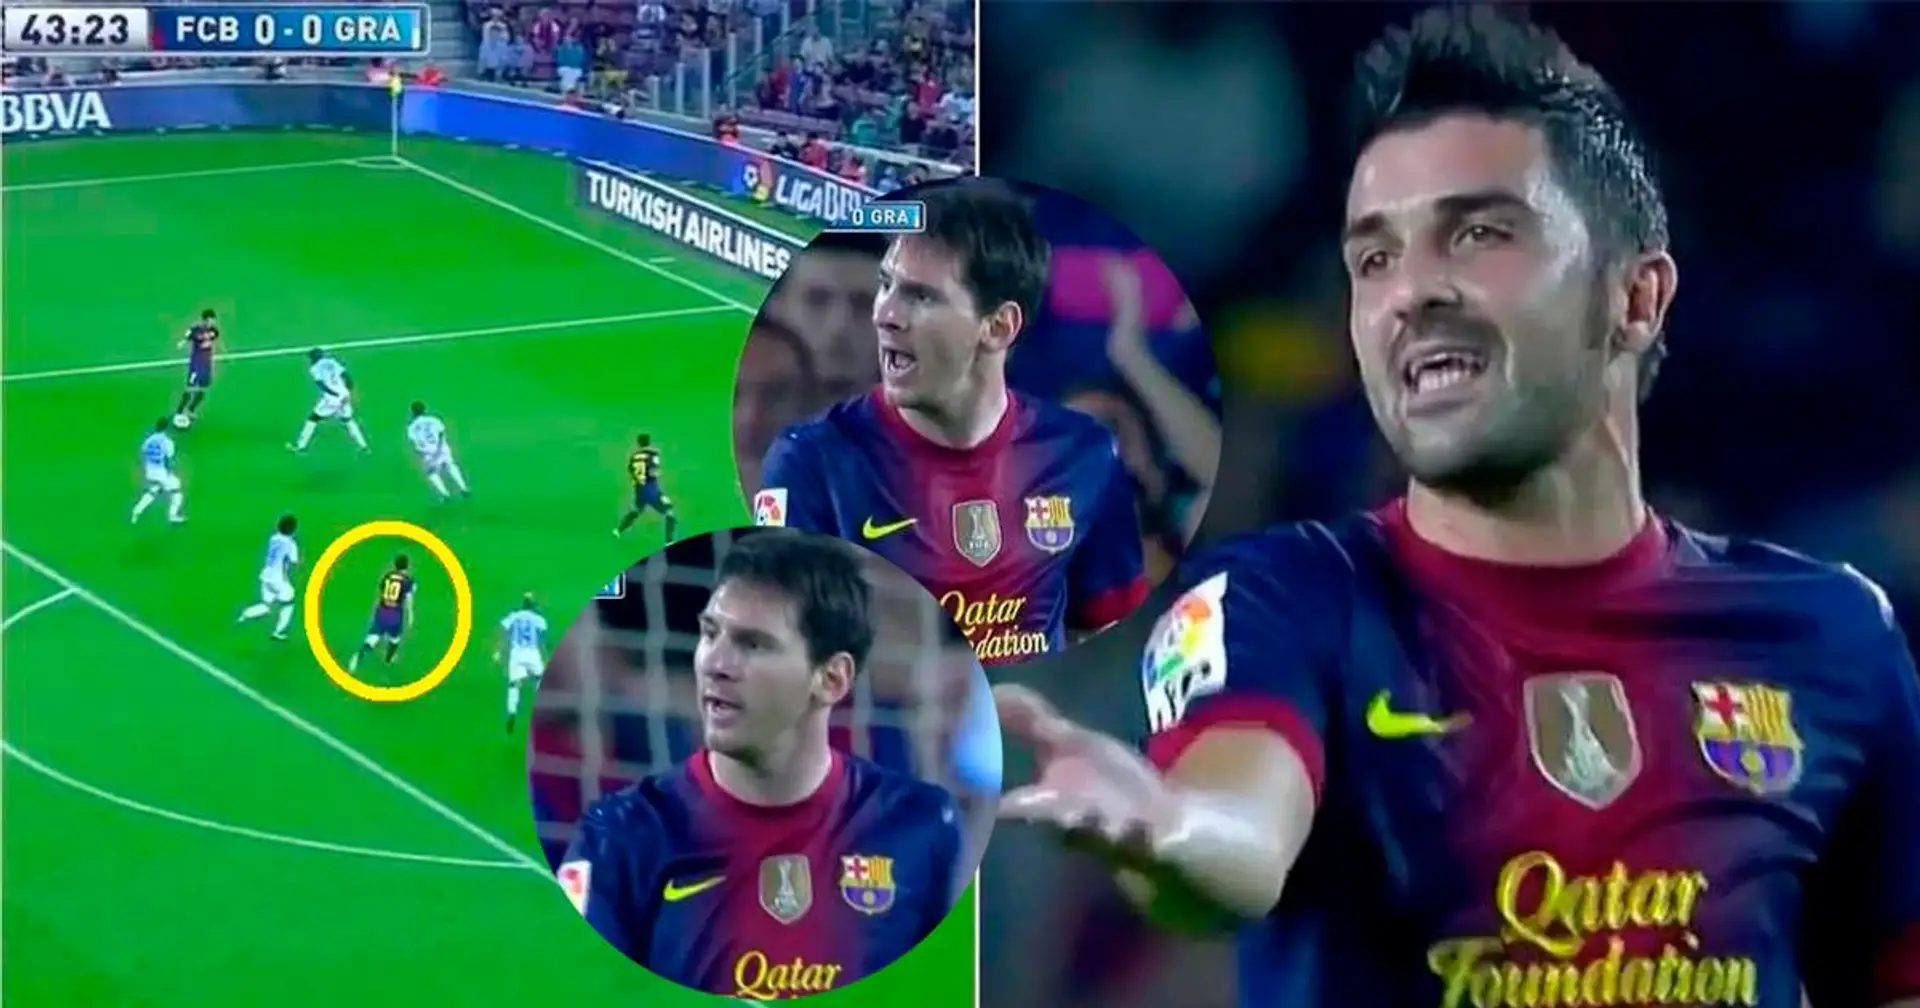 David Villa vs Lionel Messi: ce qui s'est passé entre les stars de Barcelone quand elles ont eu des difficultés à marquer lors d'un match de Liga